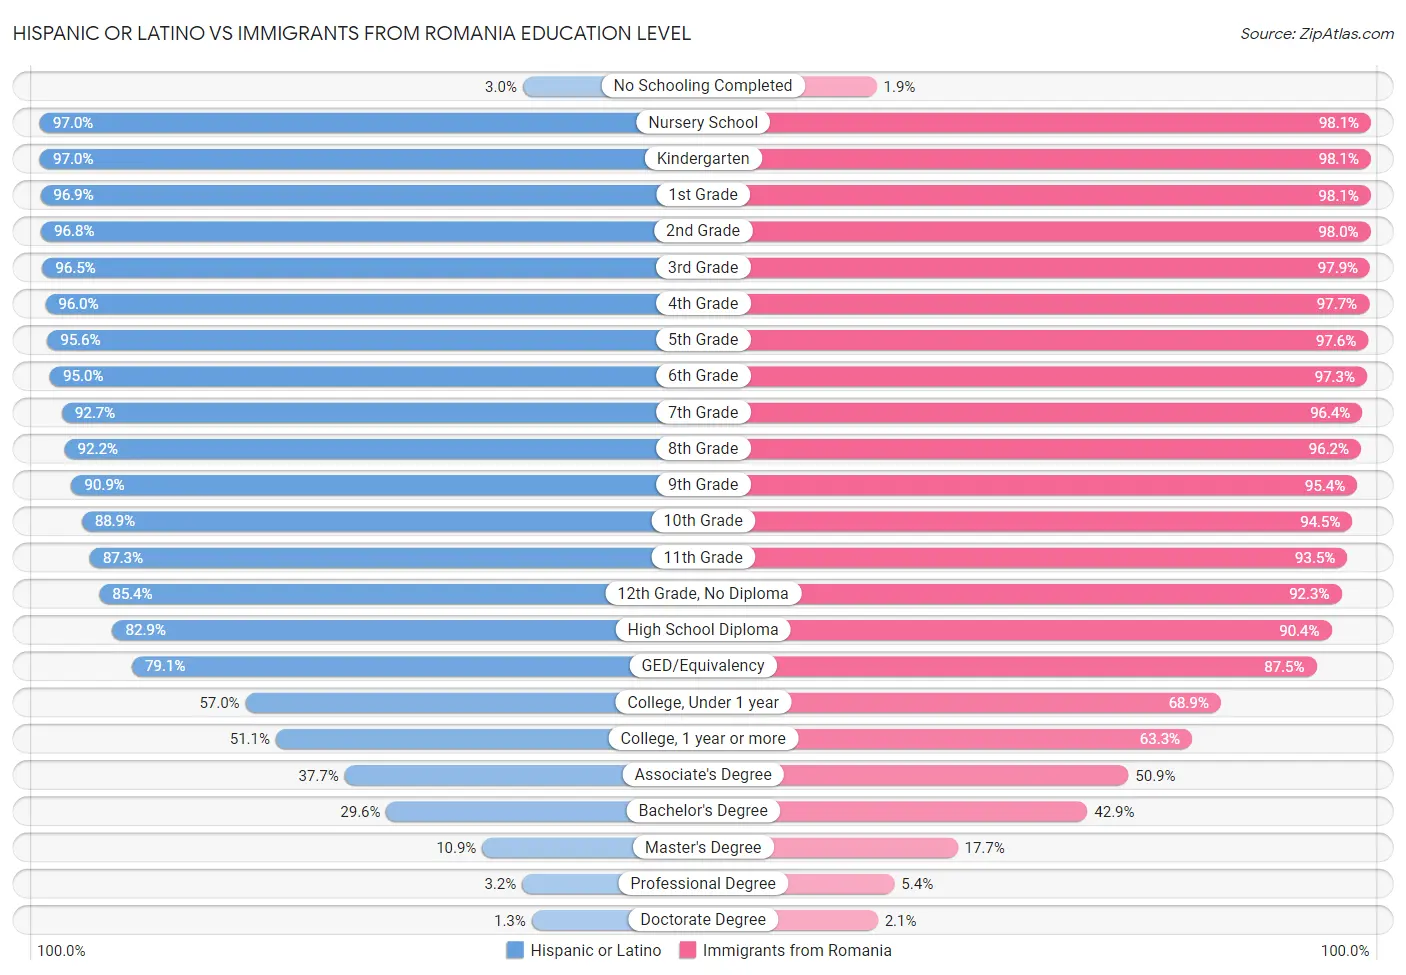 Hispanic or Latino vs Immigrants from Romania Education Level